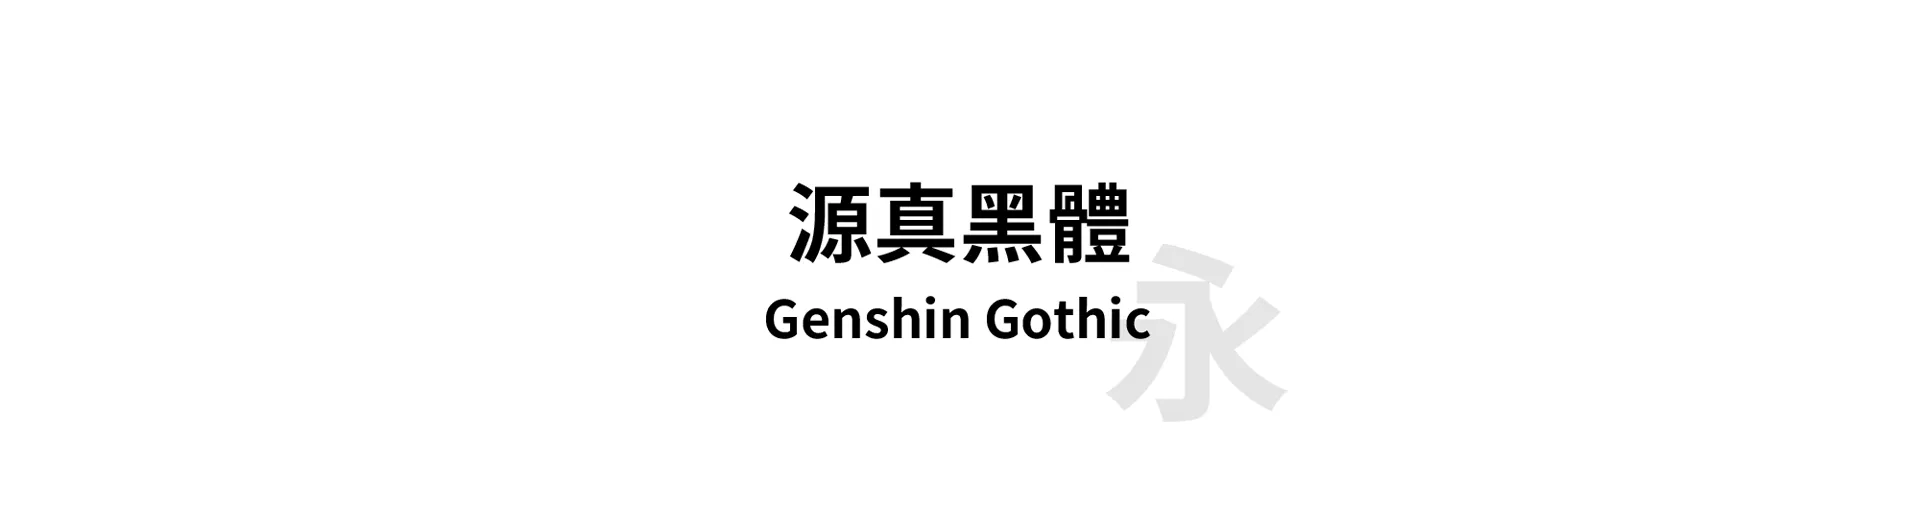 Genshin Gothic